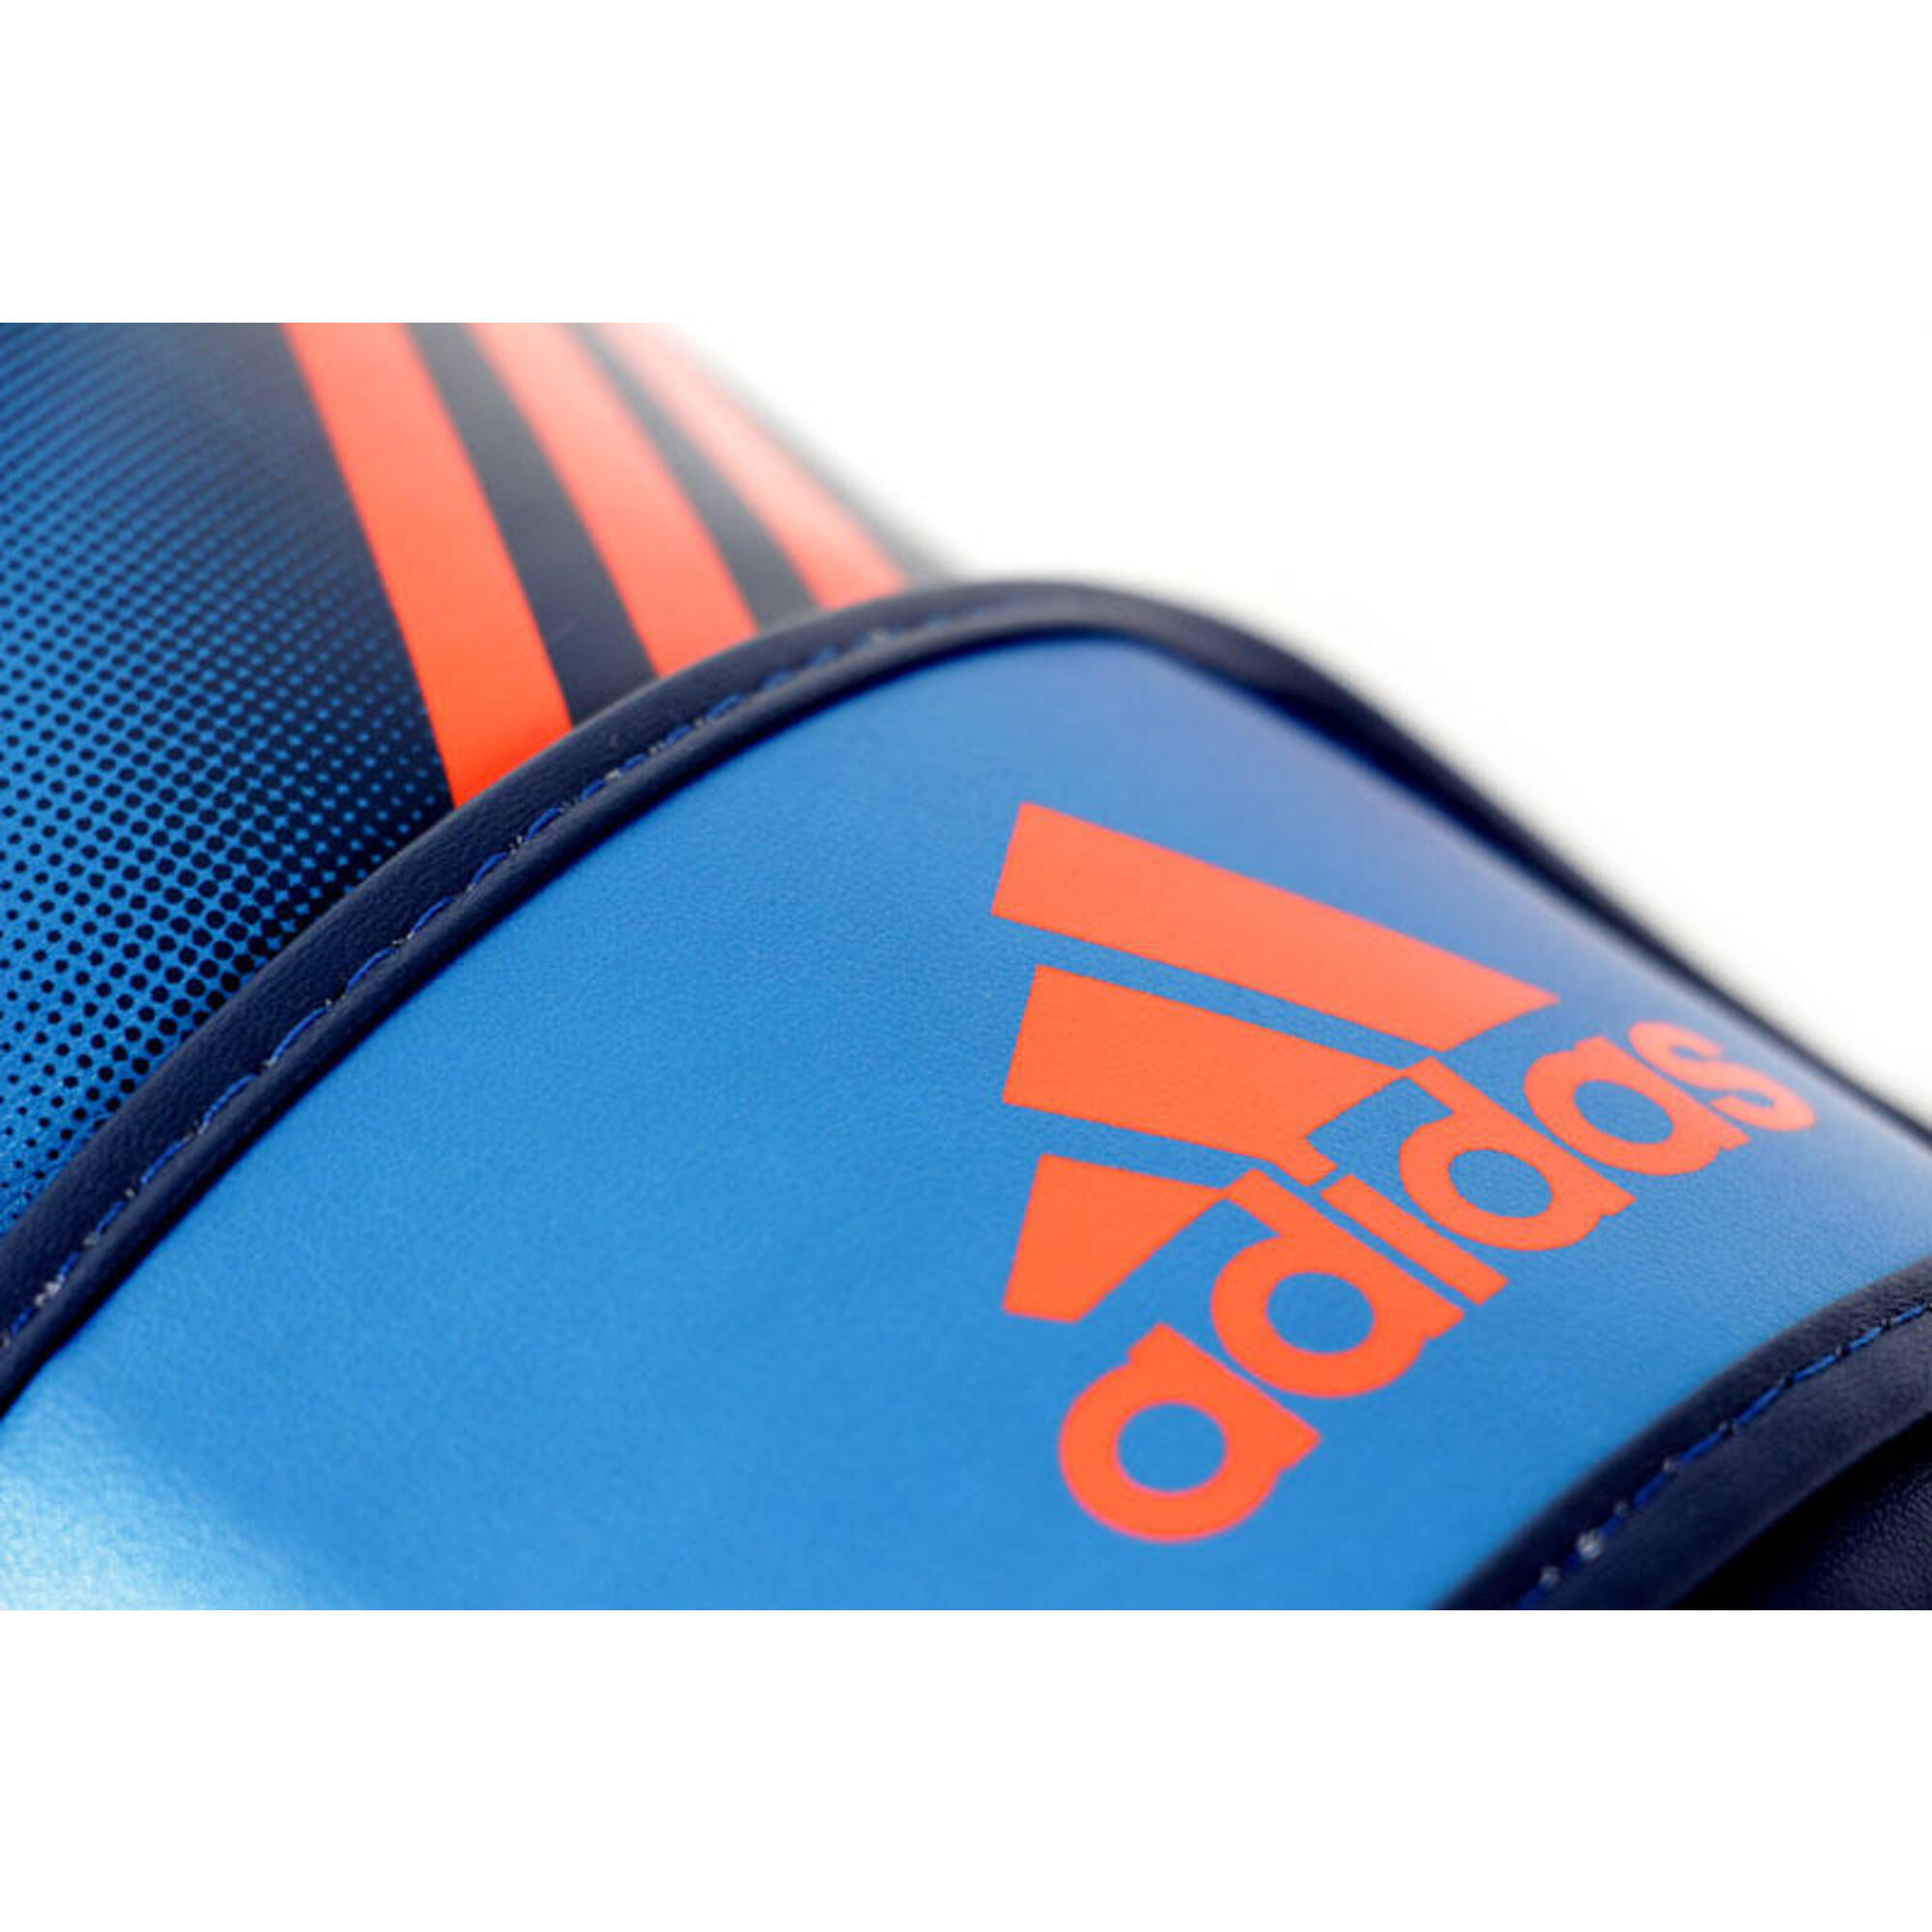 Adidas Speed 100 (Kick) Boxhandschuhe Blau - 6 oz ADIDAS - DECATHLON